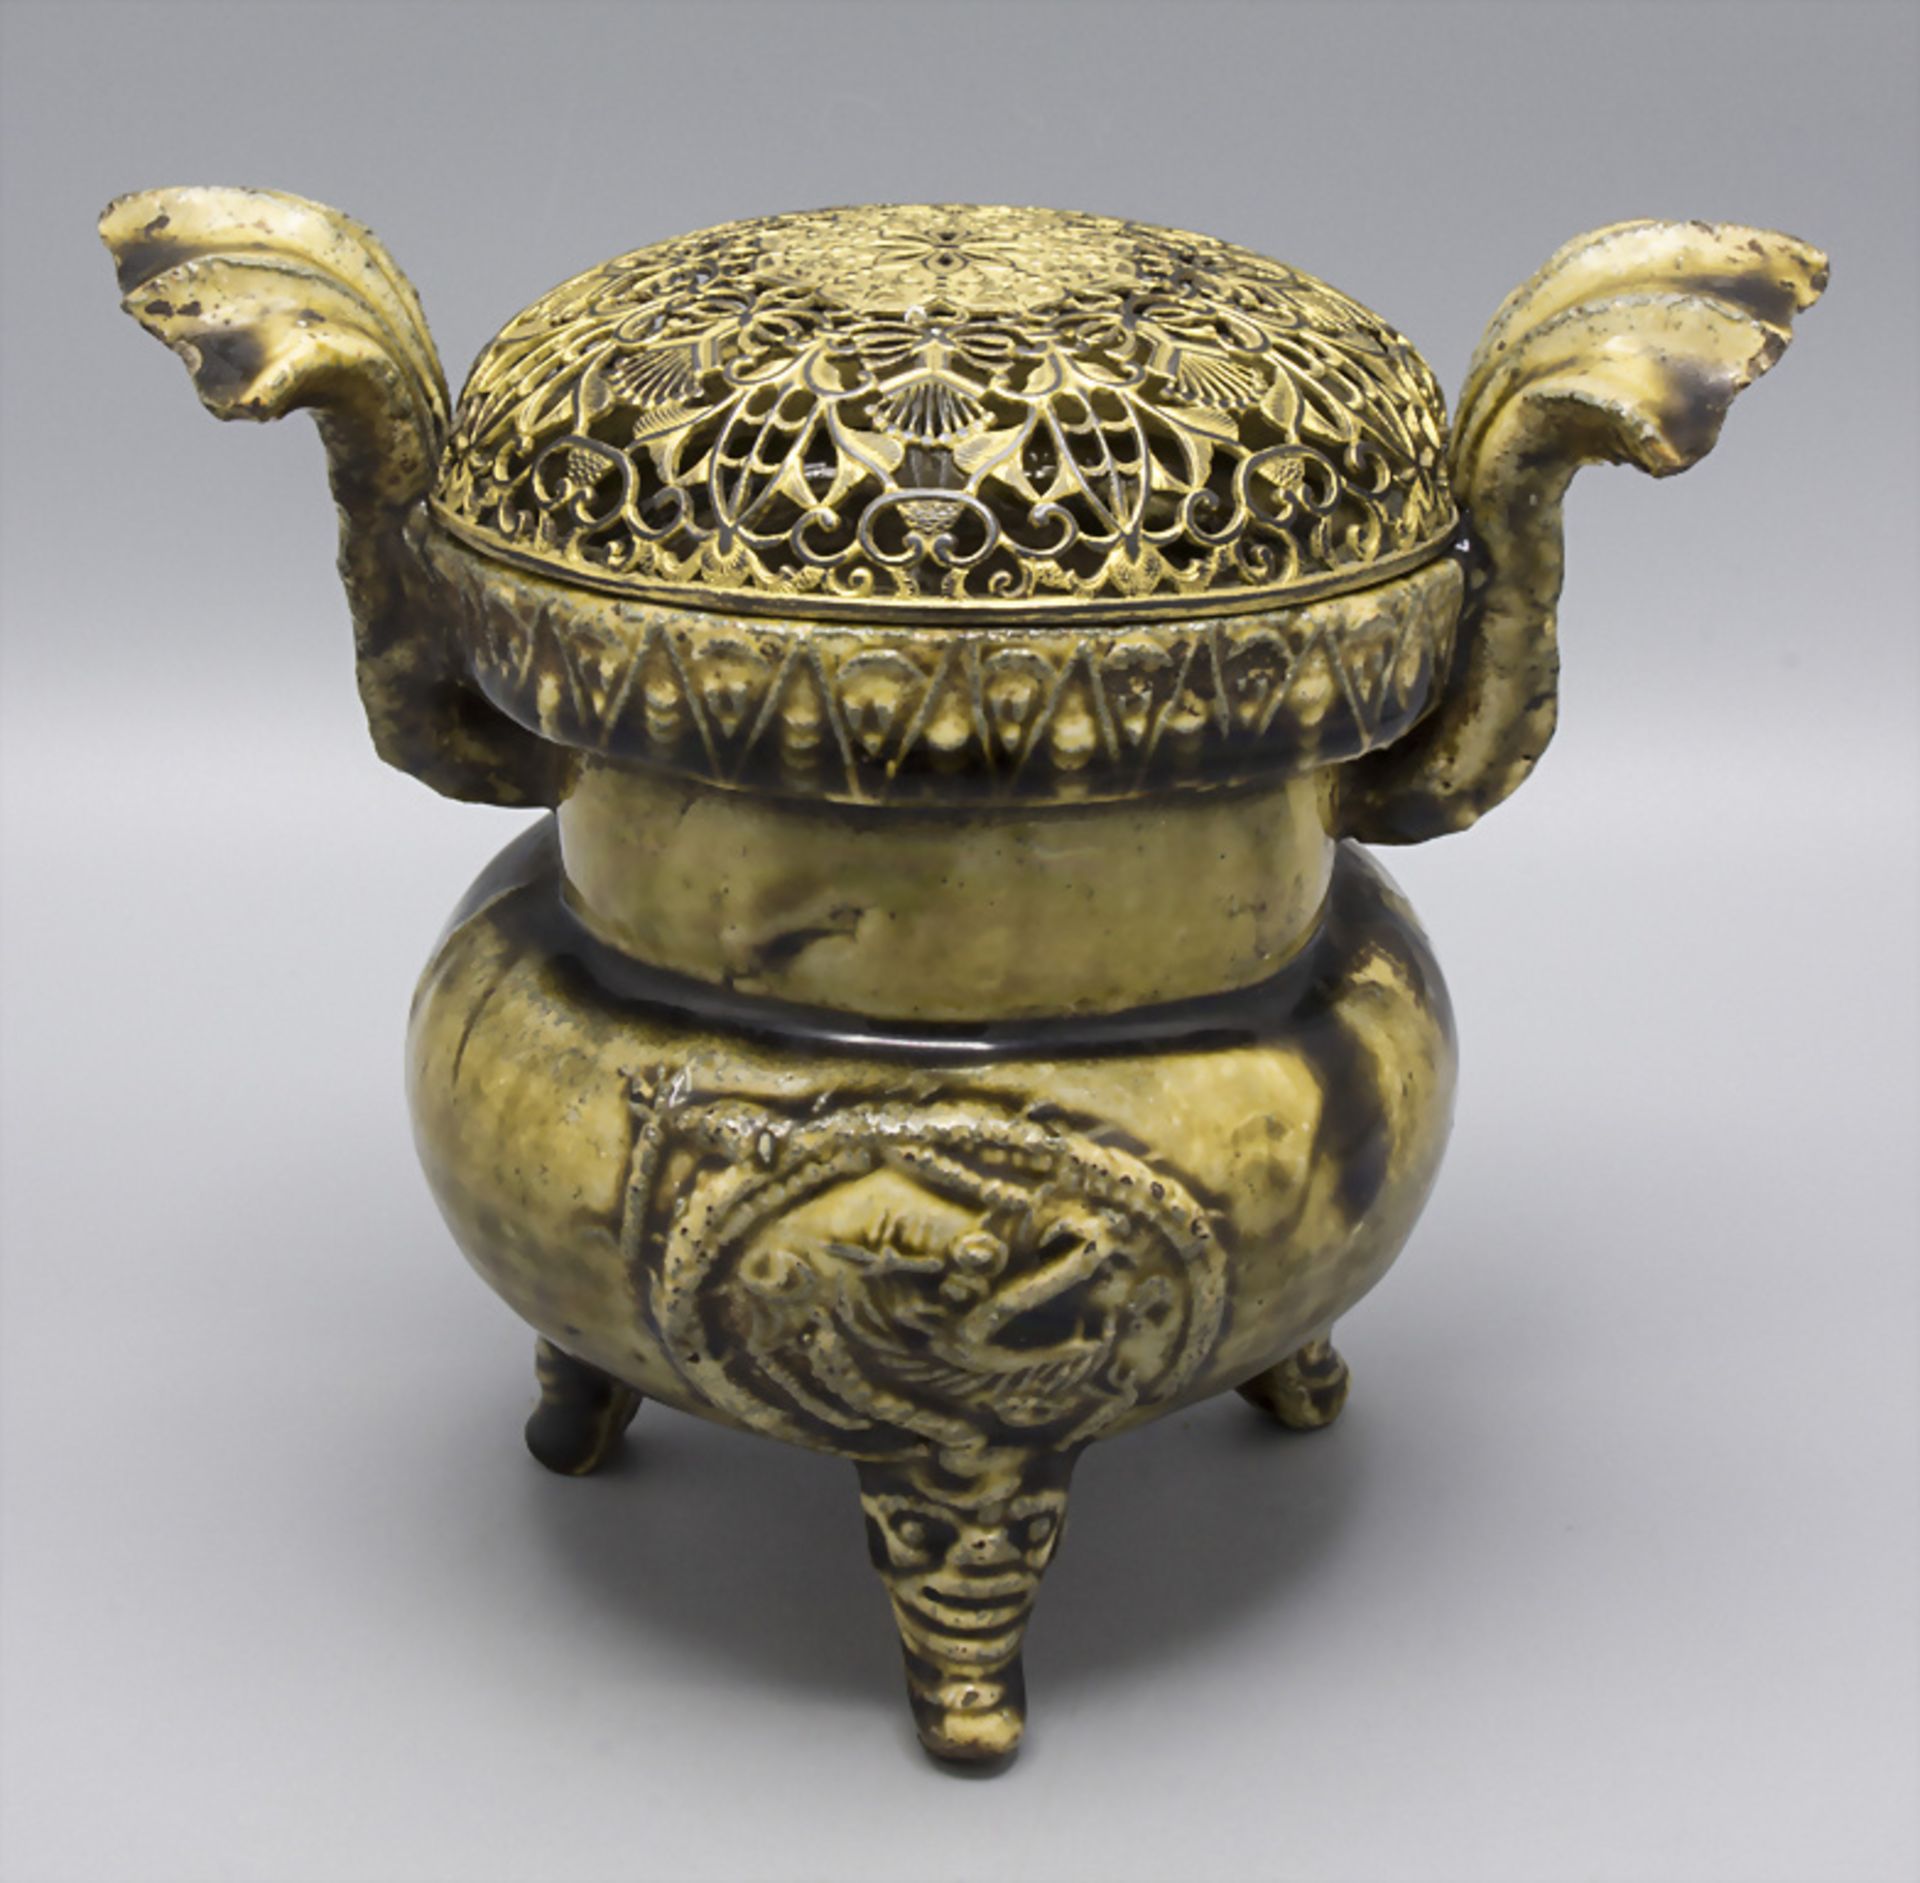 Räucherkoro / An incense coro, wohl China, Ming-Dynastie (1368-1644)